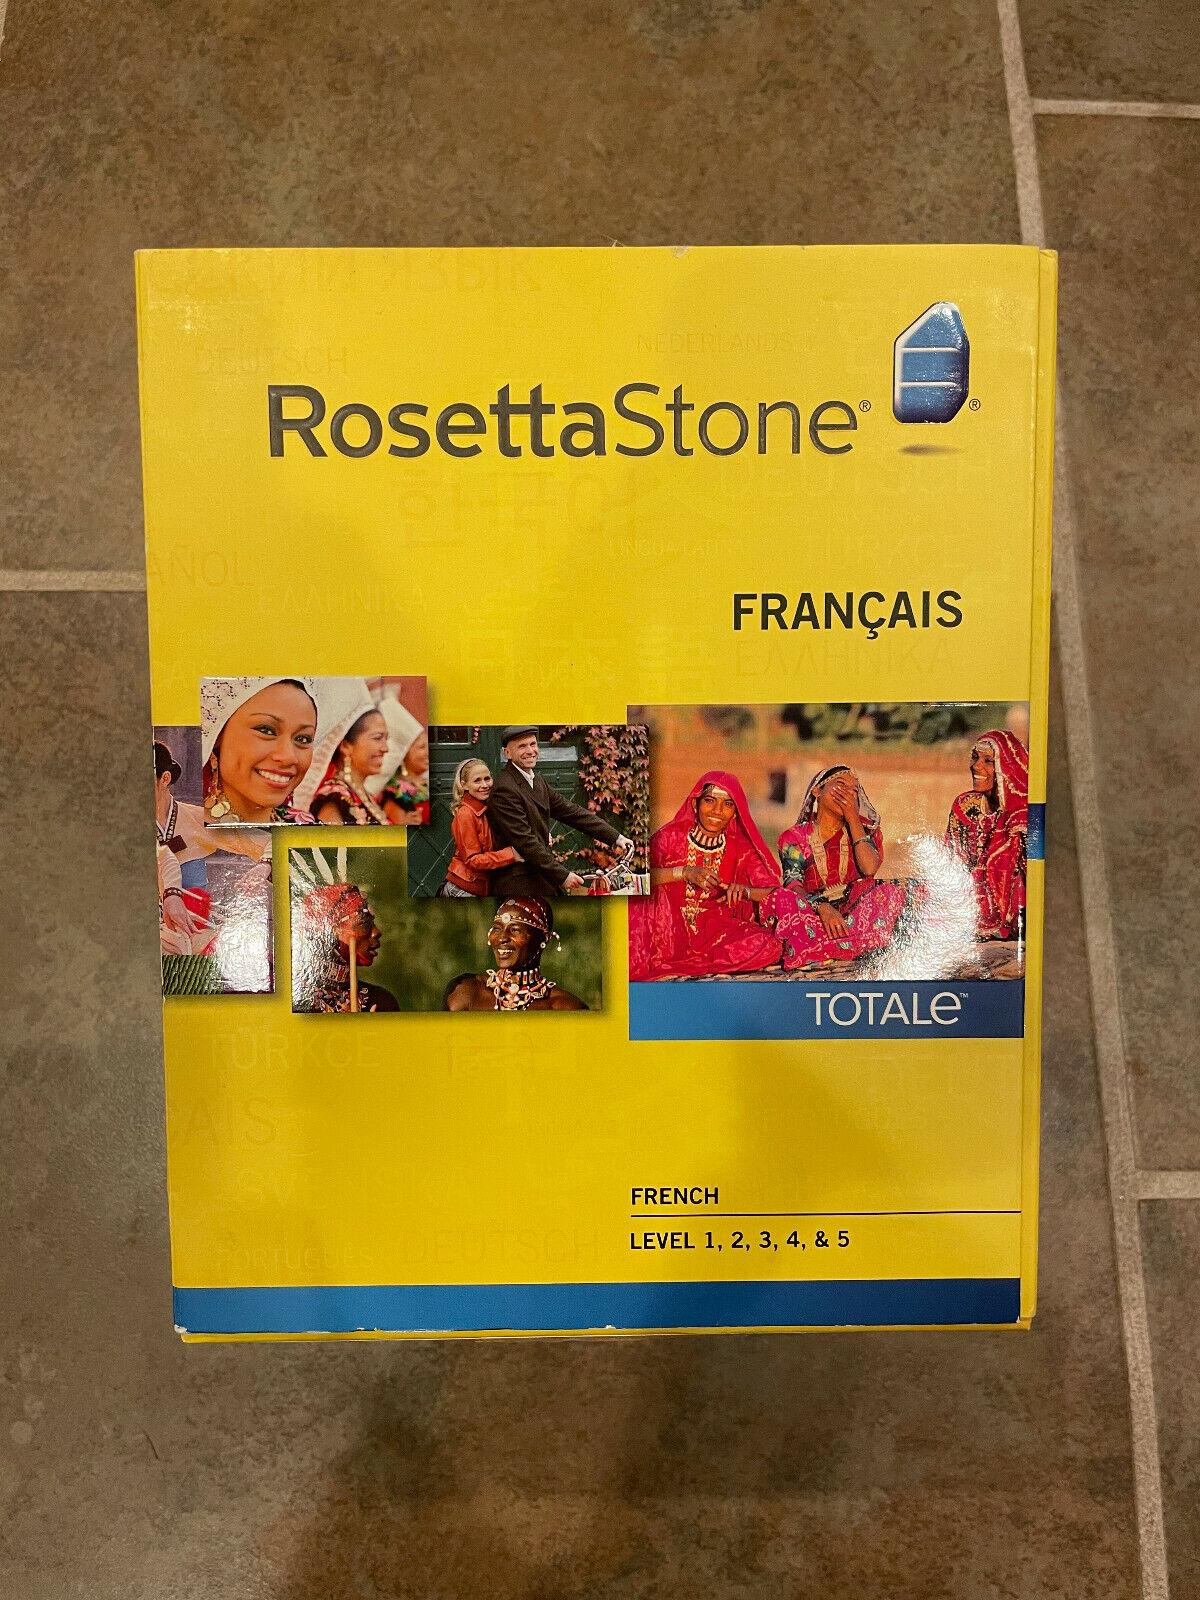 Rosetta Stone TOTALe French Version 4 Level 1-5 CD Set Mac & PC- No Headphones